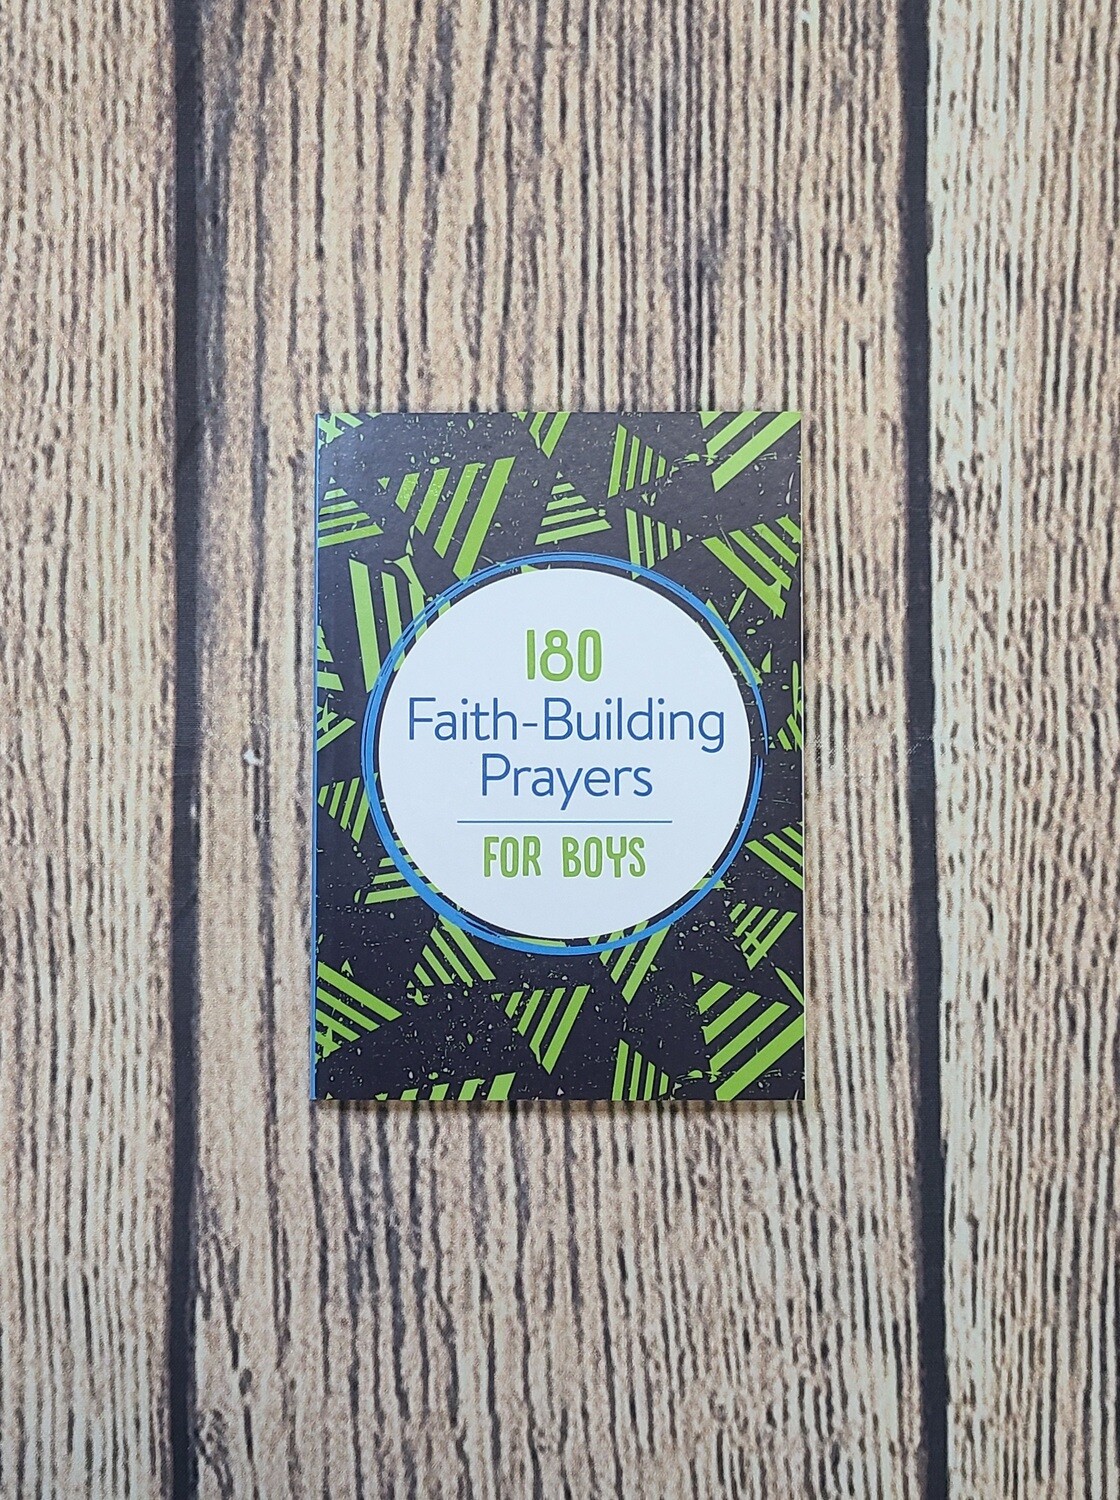 180 Faith-Building Prayers for Boys by Barbour Publishing, Inc.